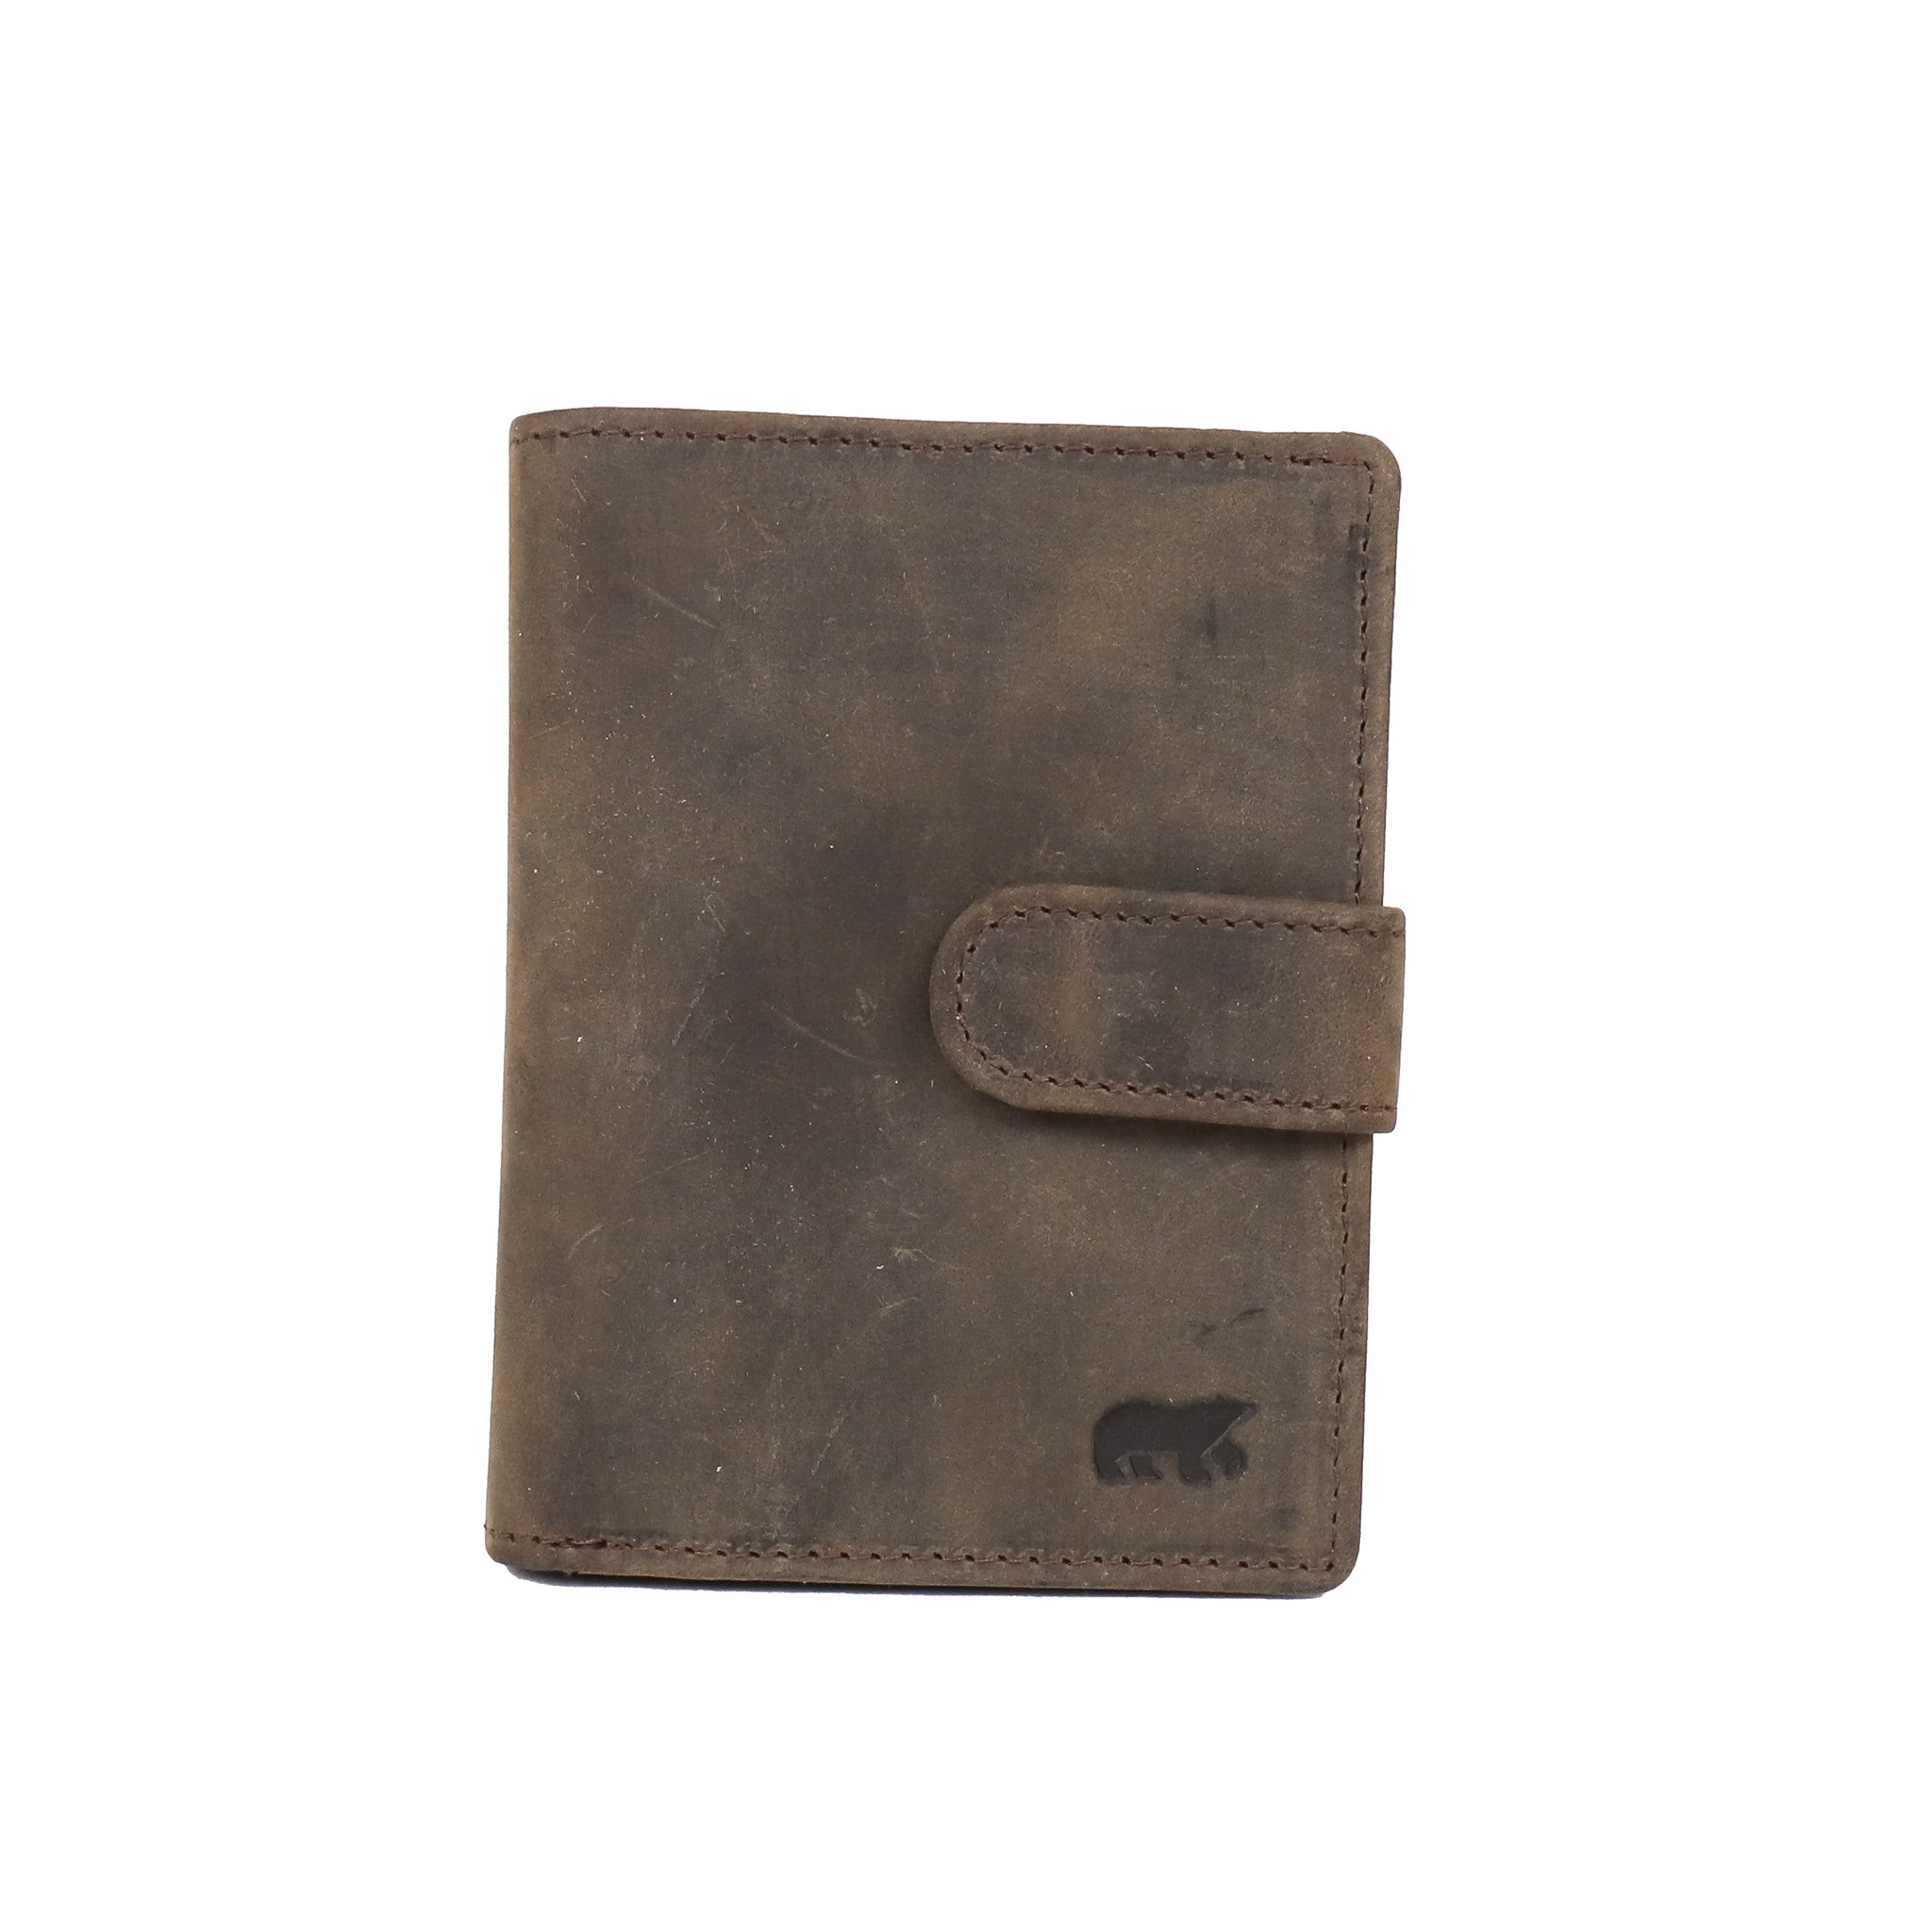 Card folder 'Vic' brown - HD 527 RFID